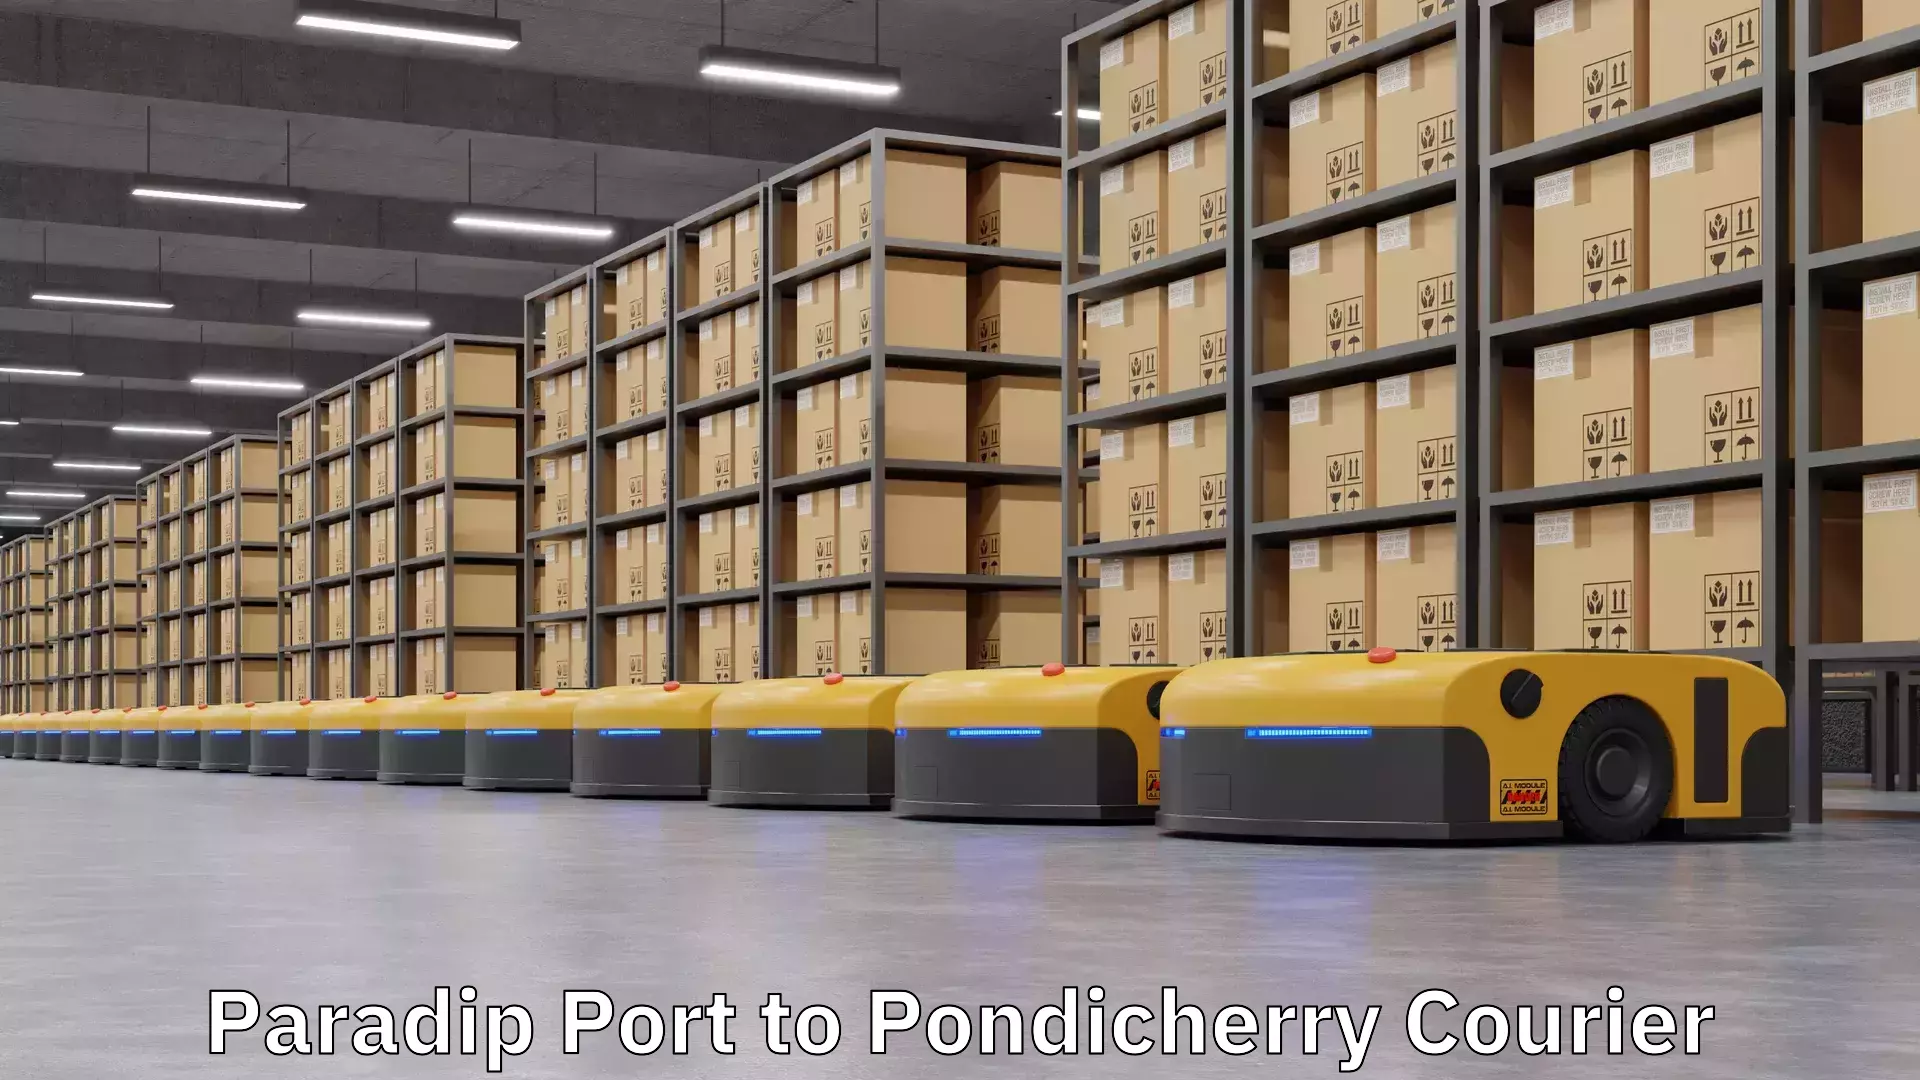 High-speed parcel service Paradip Port to Pondicherry